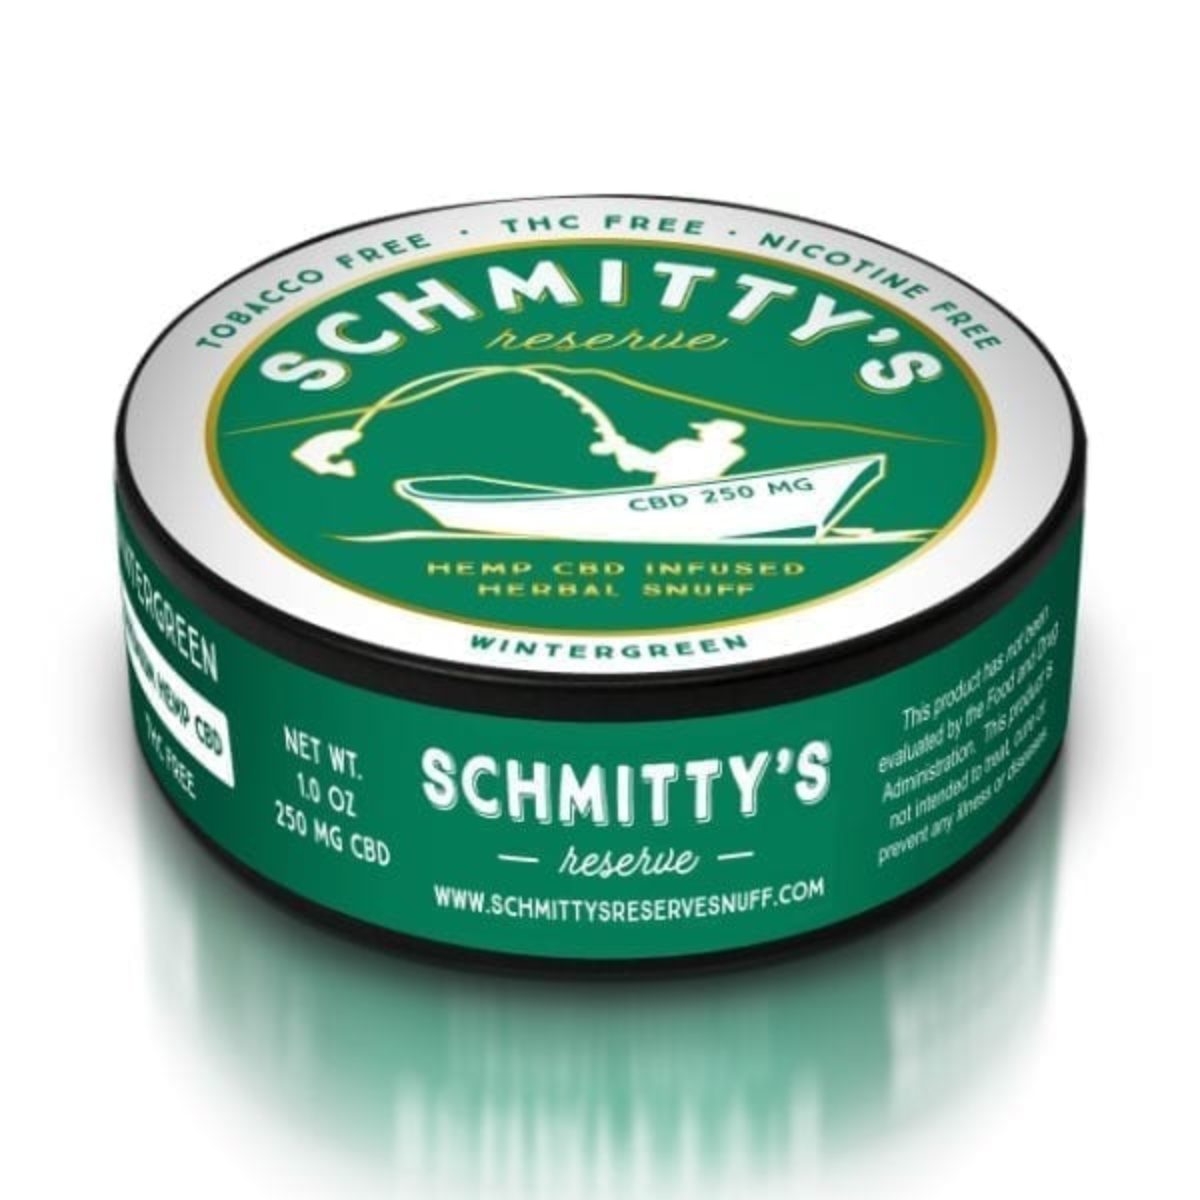 Schmitty’s Snuff Reserve CBD Wintergreen